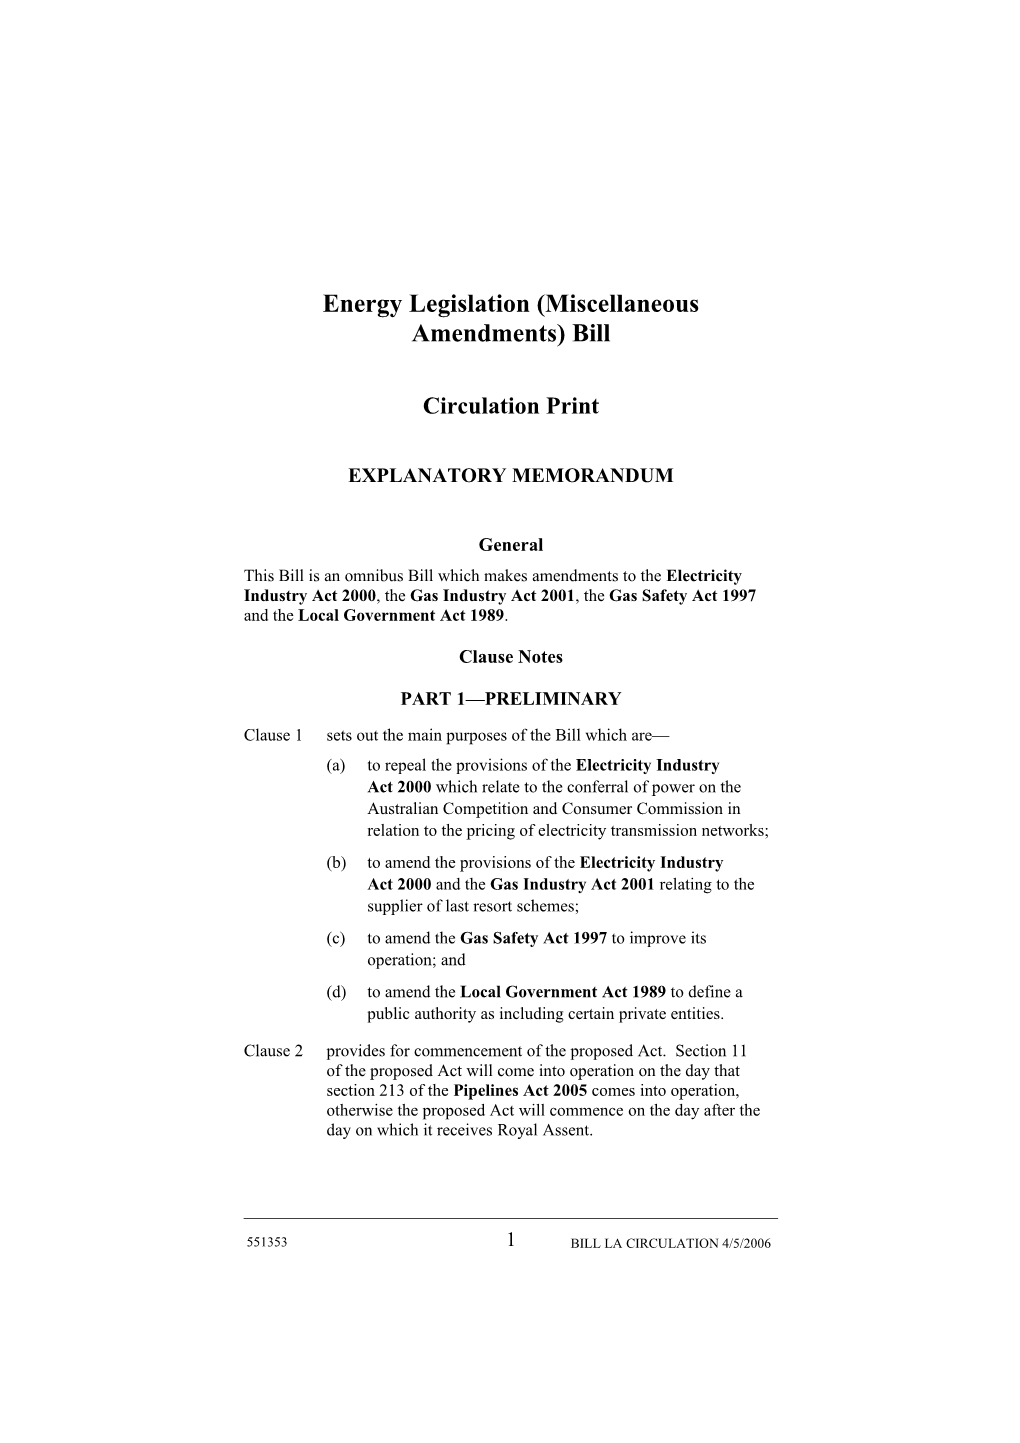 Energy Legislation (Miscellaneous Amendments) Bill